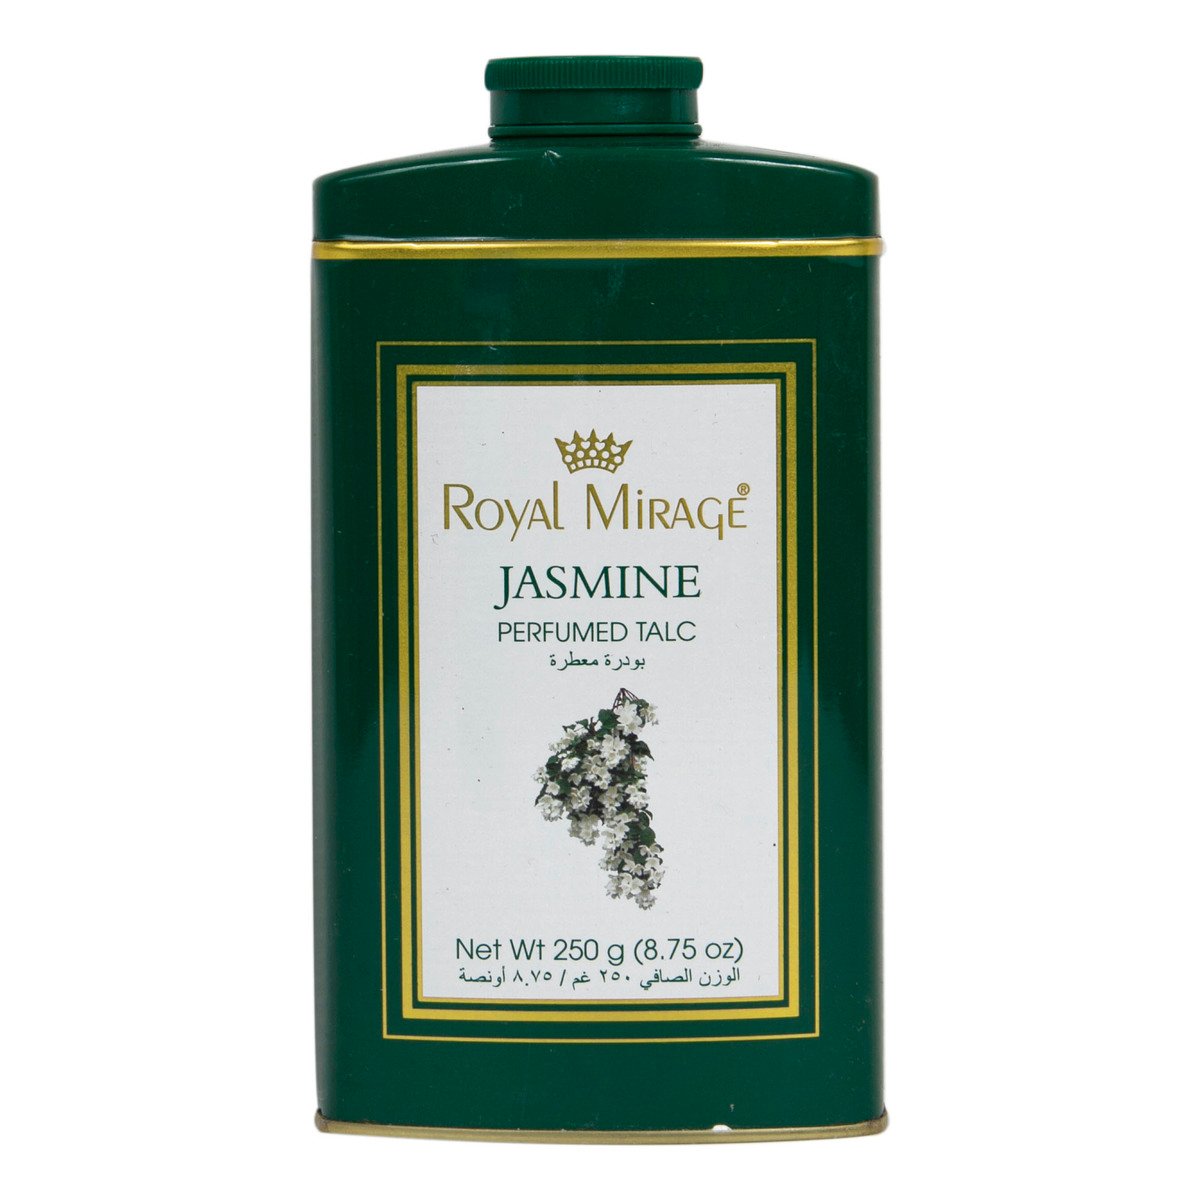 Royal Mirage Perfumed Talc Jasmine 250 g